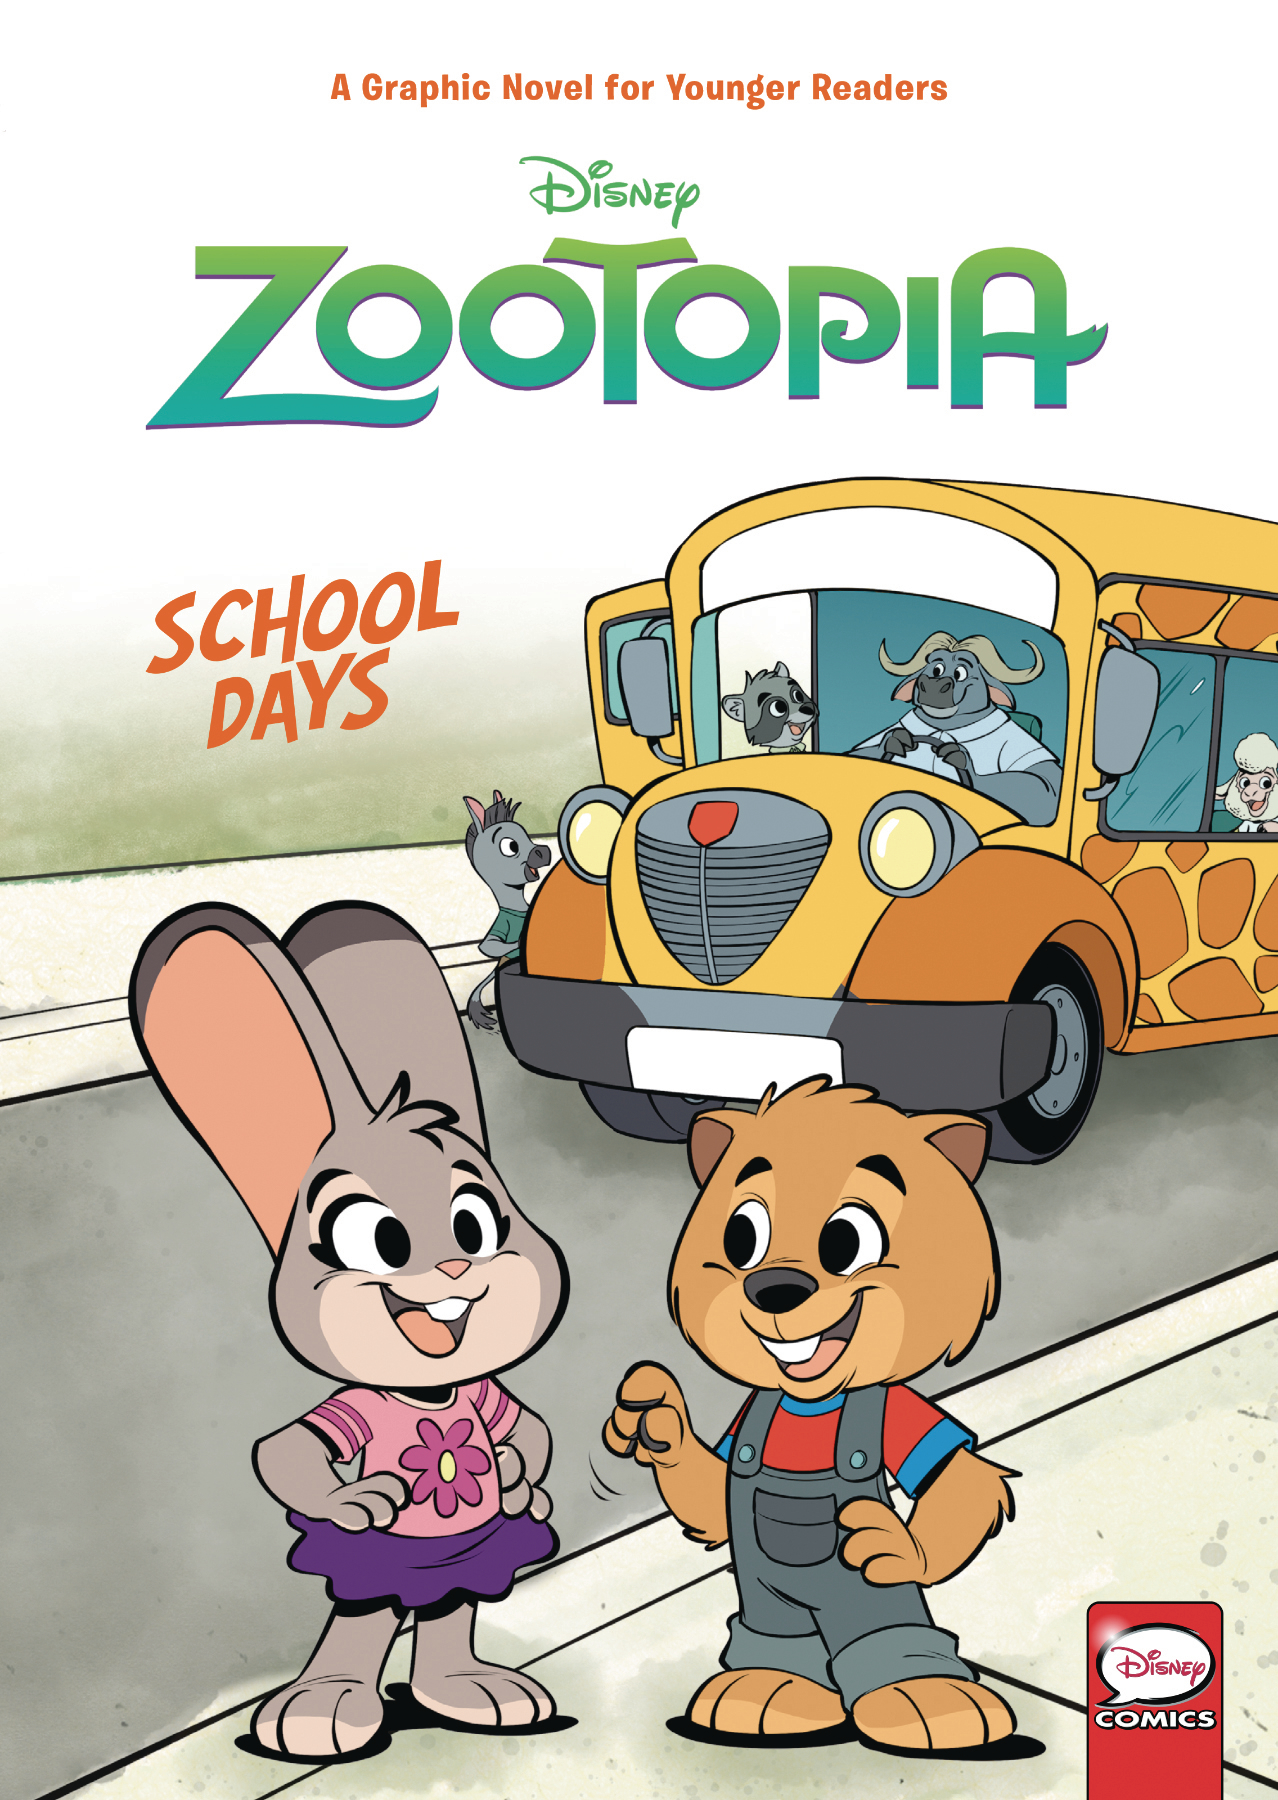 Disney Zootopia School Days (Ya) Hardcover Volume 1